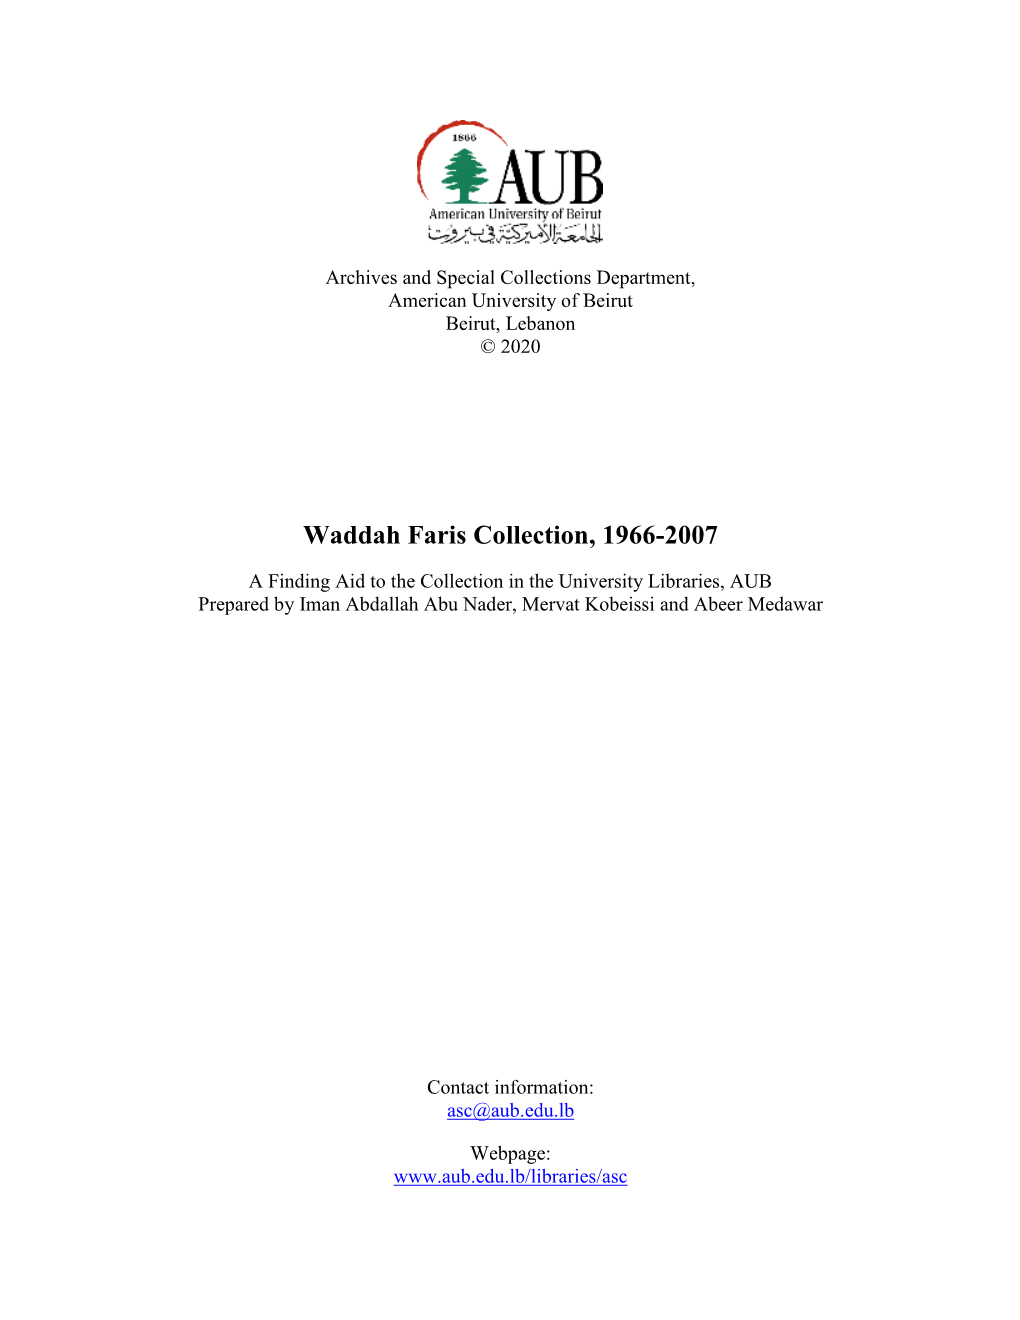 Waddah Faris Collection, 1966-2007